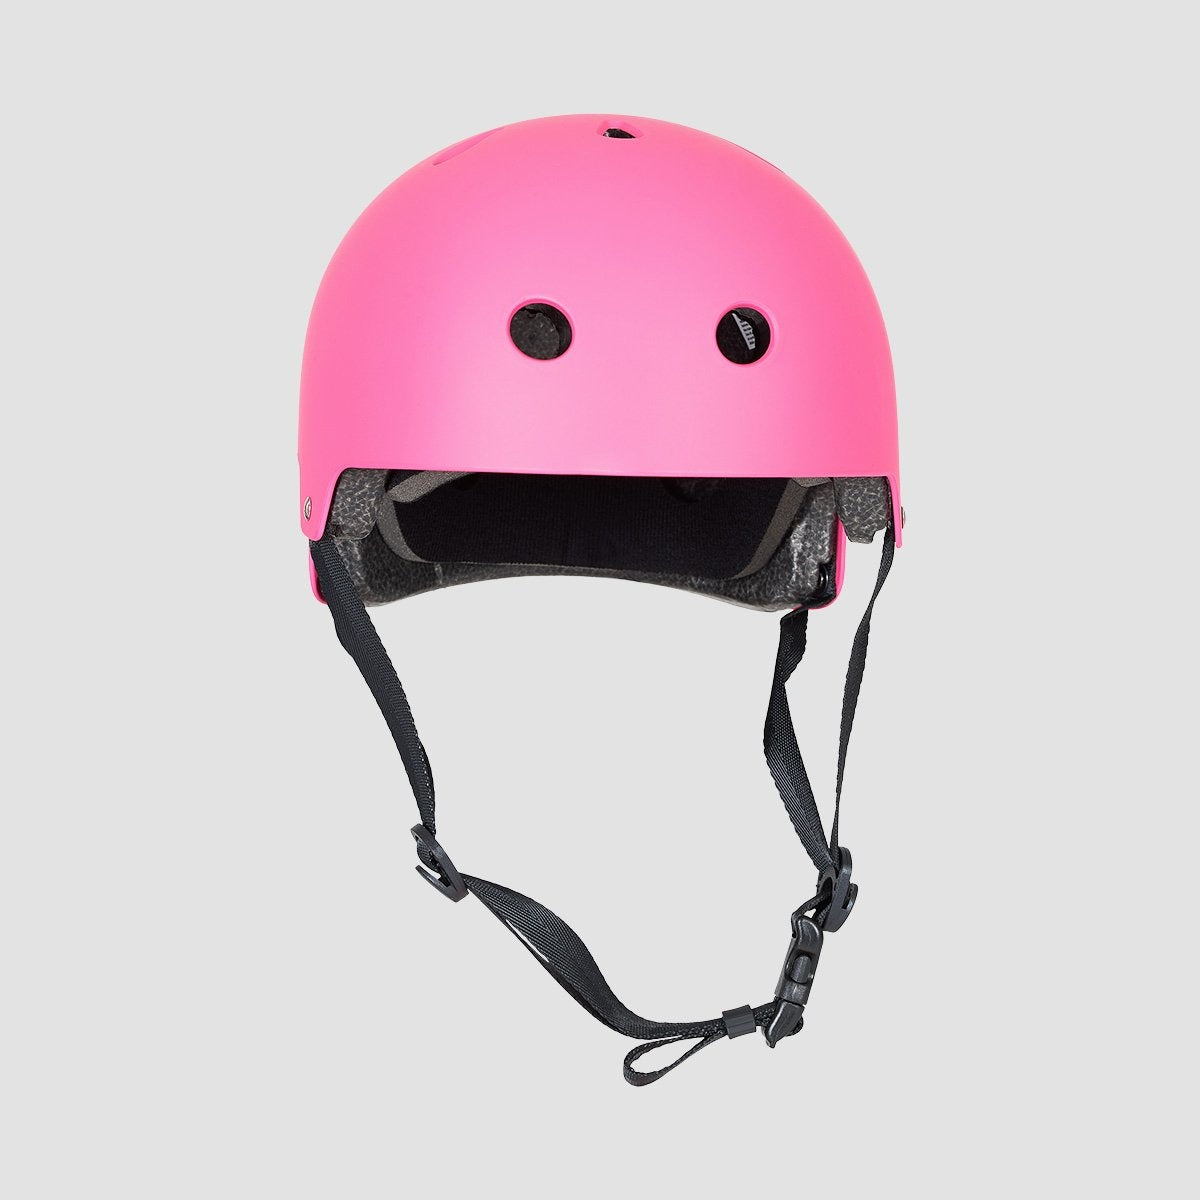 SFR Essentials Helmet Matt Fluo Pink - Safety Gear